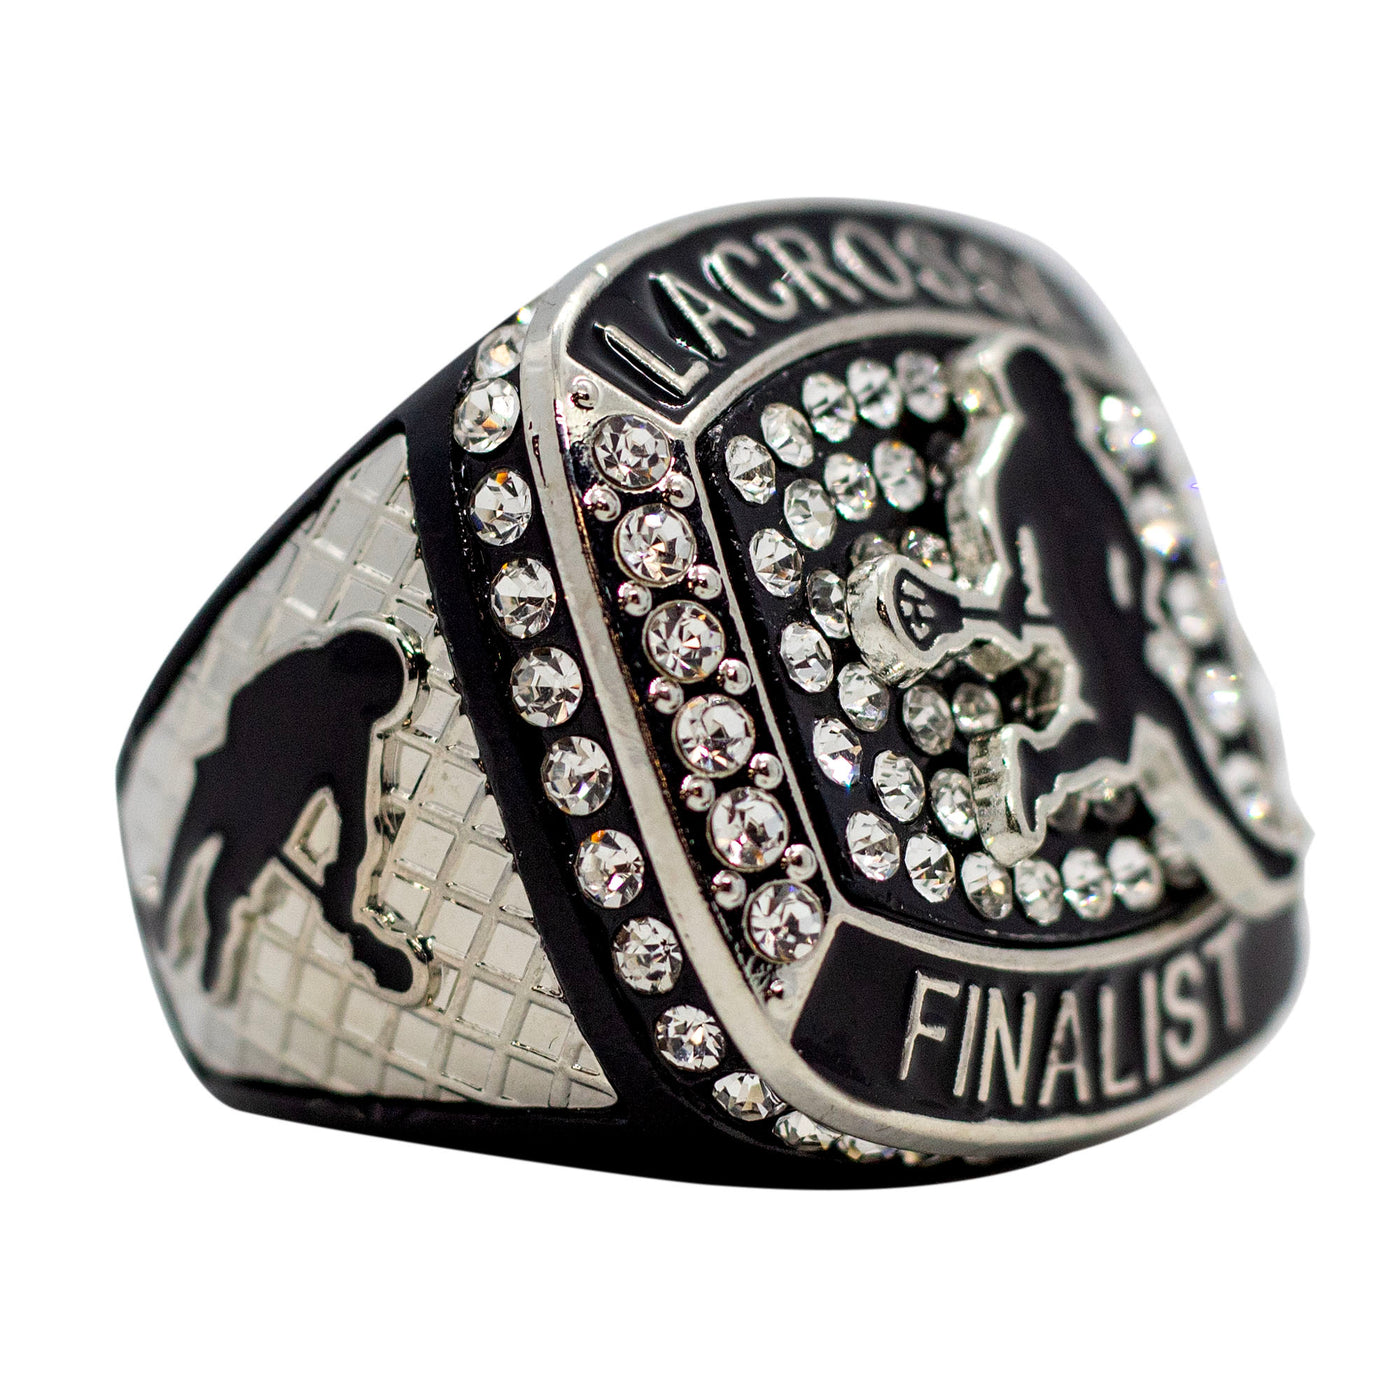 Lacrosse Black Finalist Ring